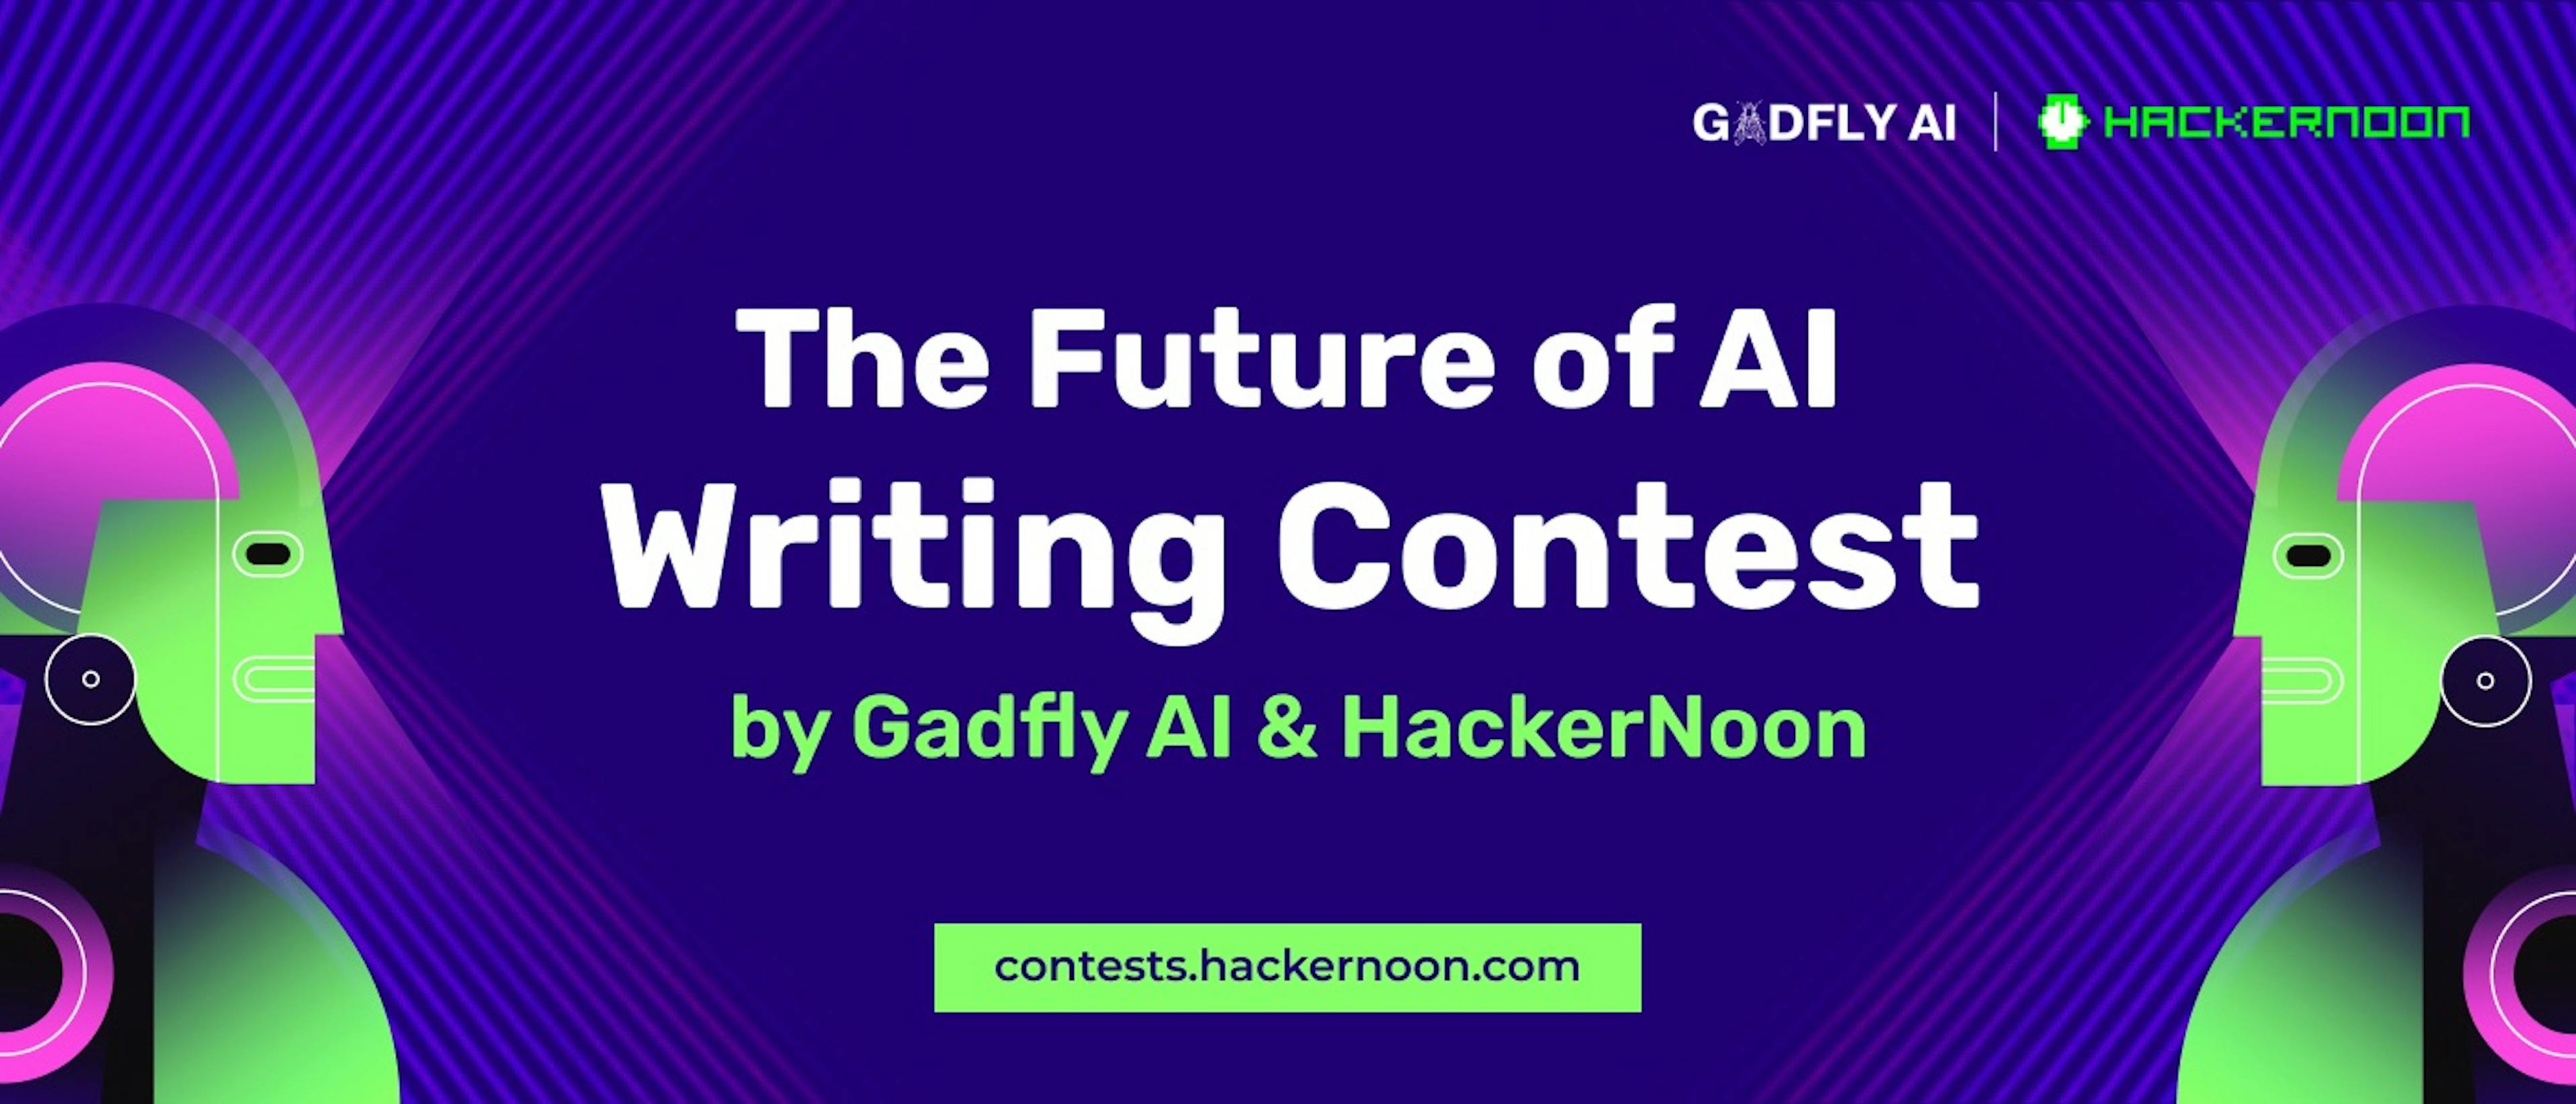 featured image - GadflyAI による AI の未来ライティング コンテスト: 優勝者が発表されました!